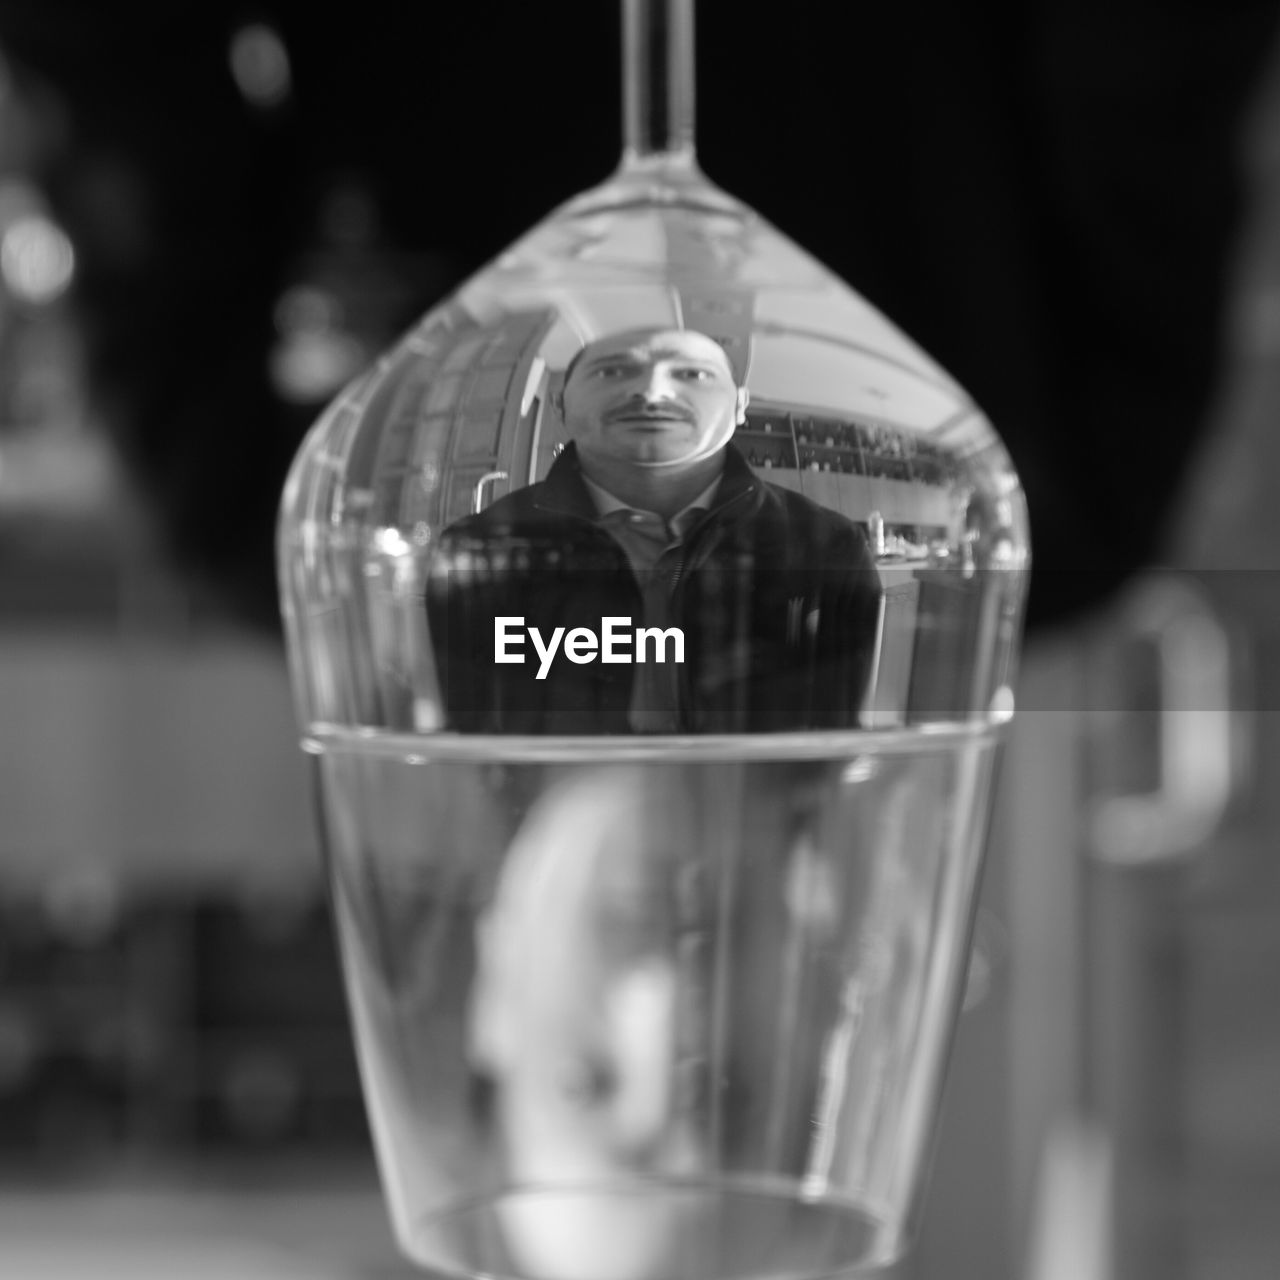 Reflection of man in upside down wineglass